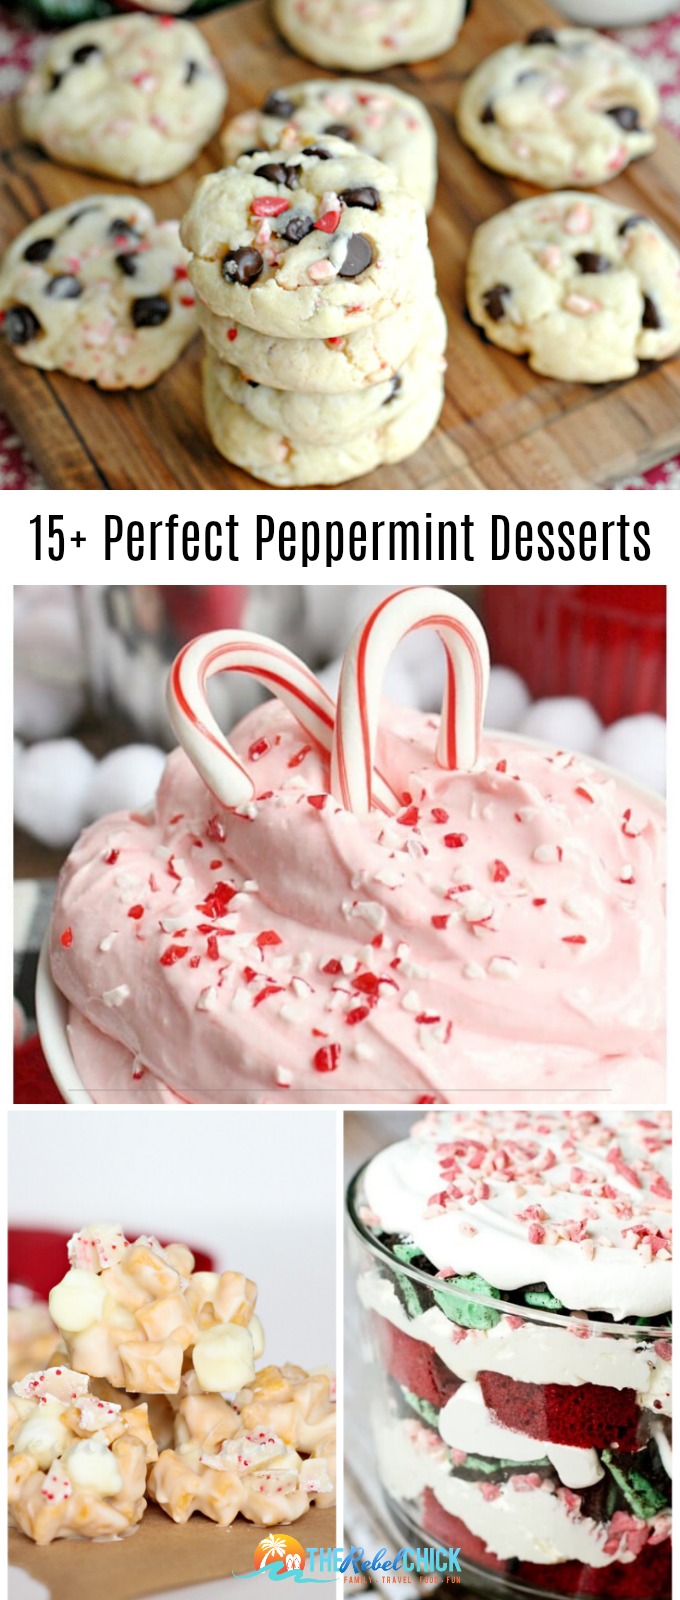 15+ Perfect Peppermint Desserts Recipes